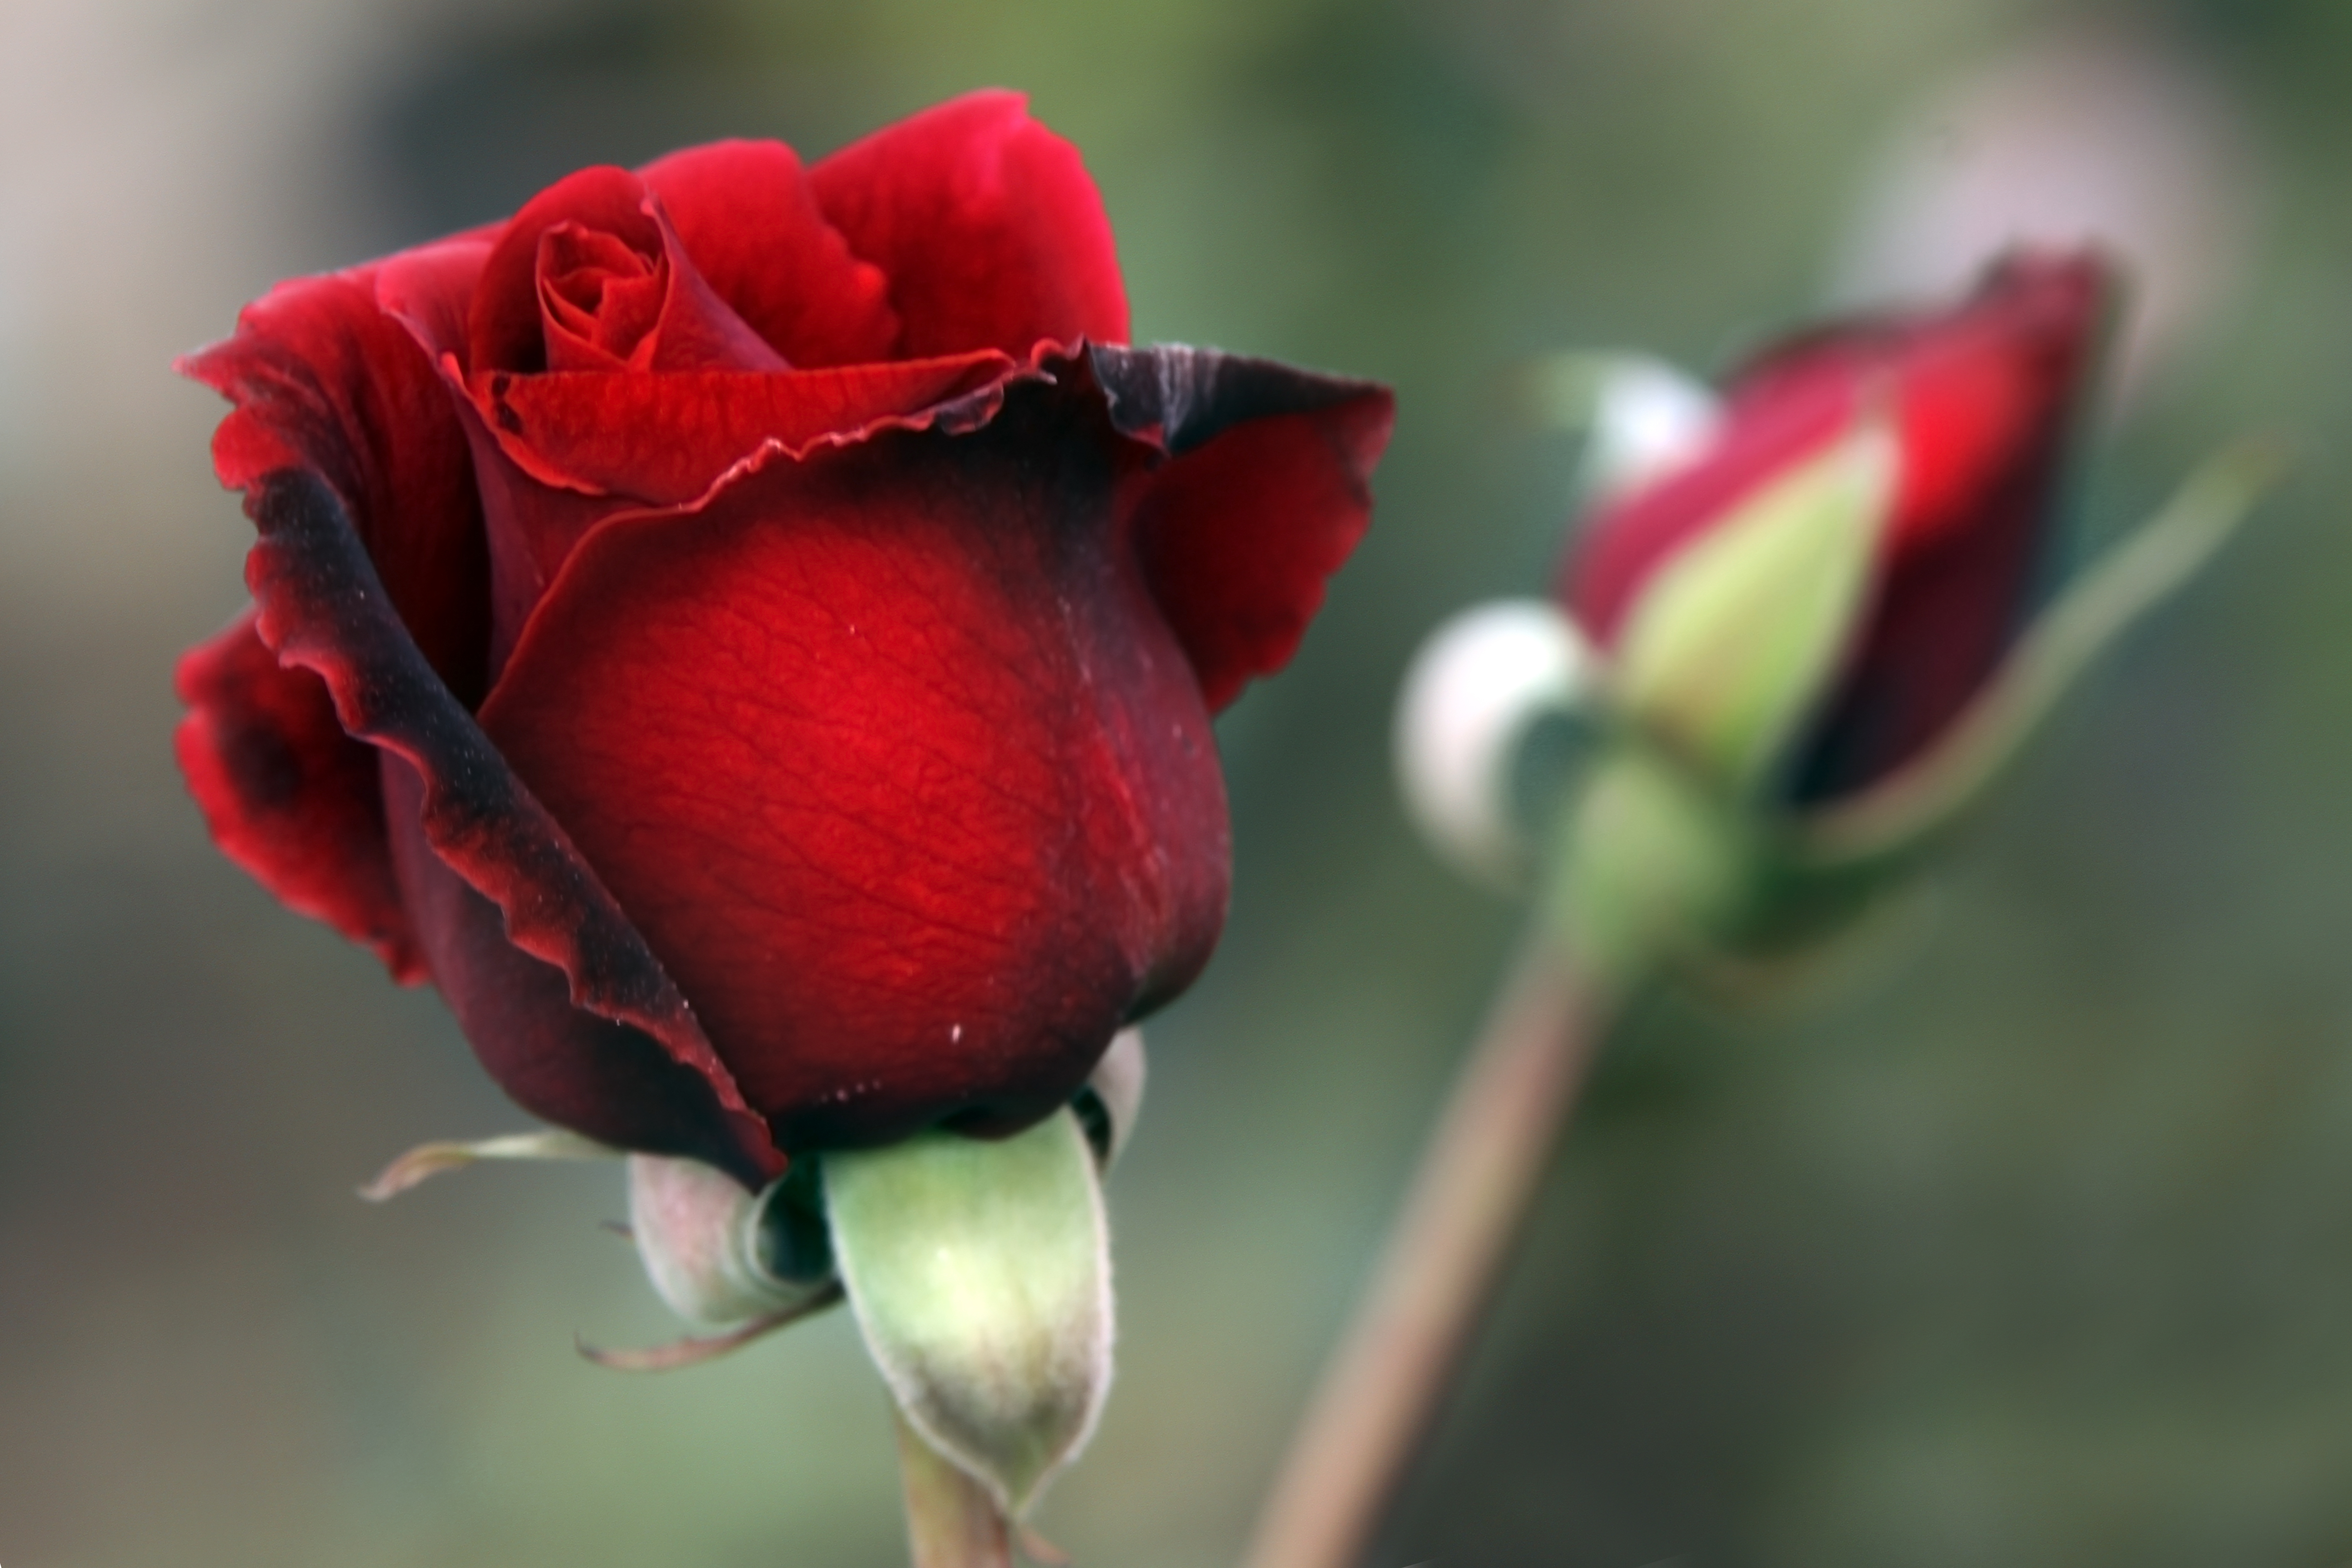 Красивое фото красной розы. Ред ред Роуз.